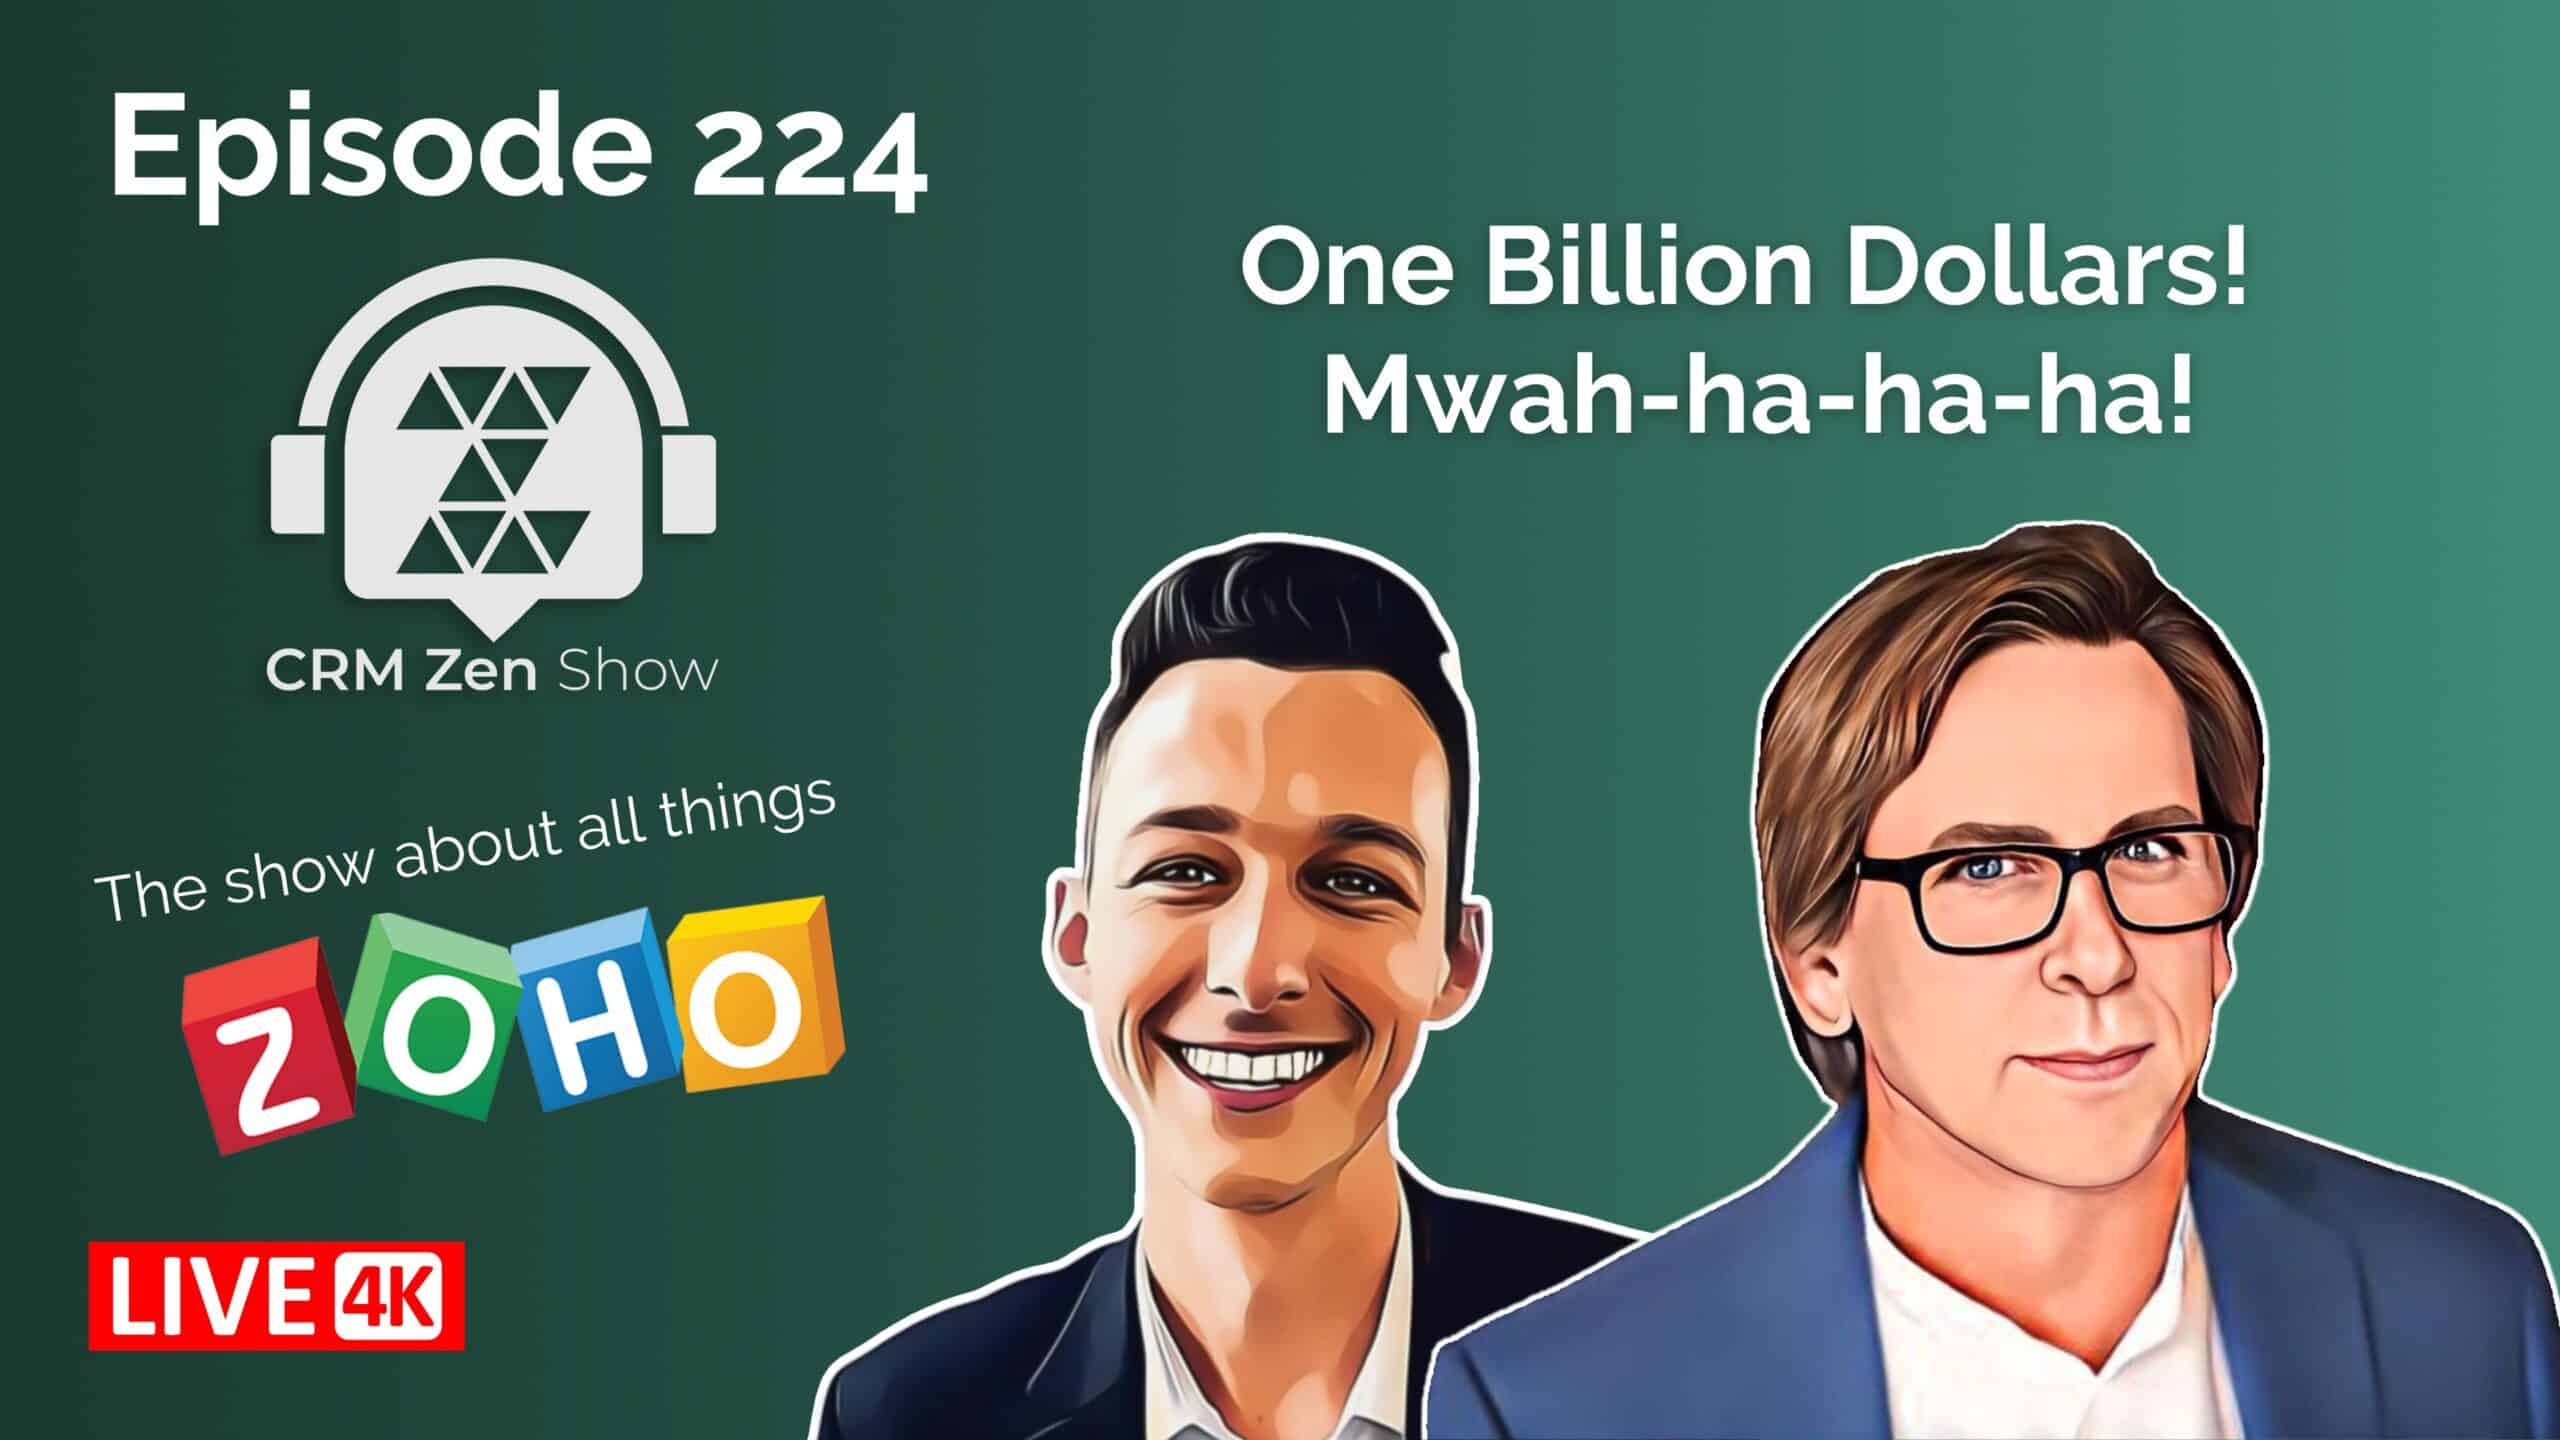 CRM Zen Show Episode 224 - One Billion Dollars! Mwah-ha-ha-ha!